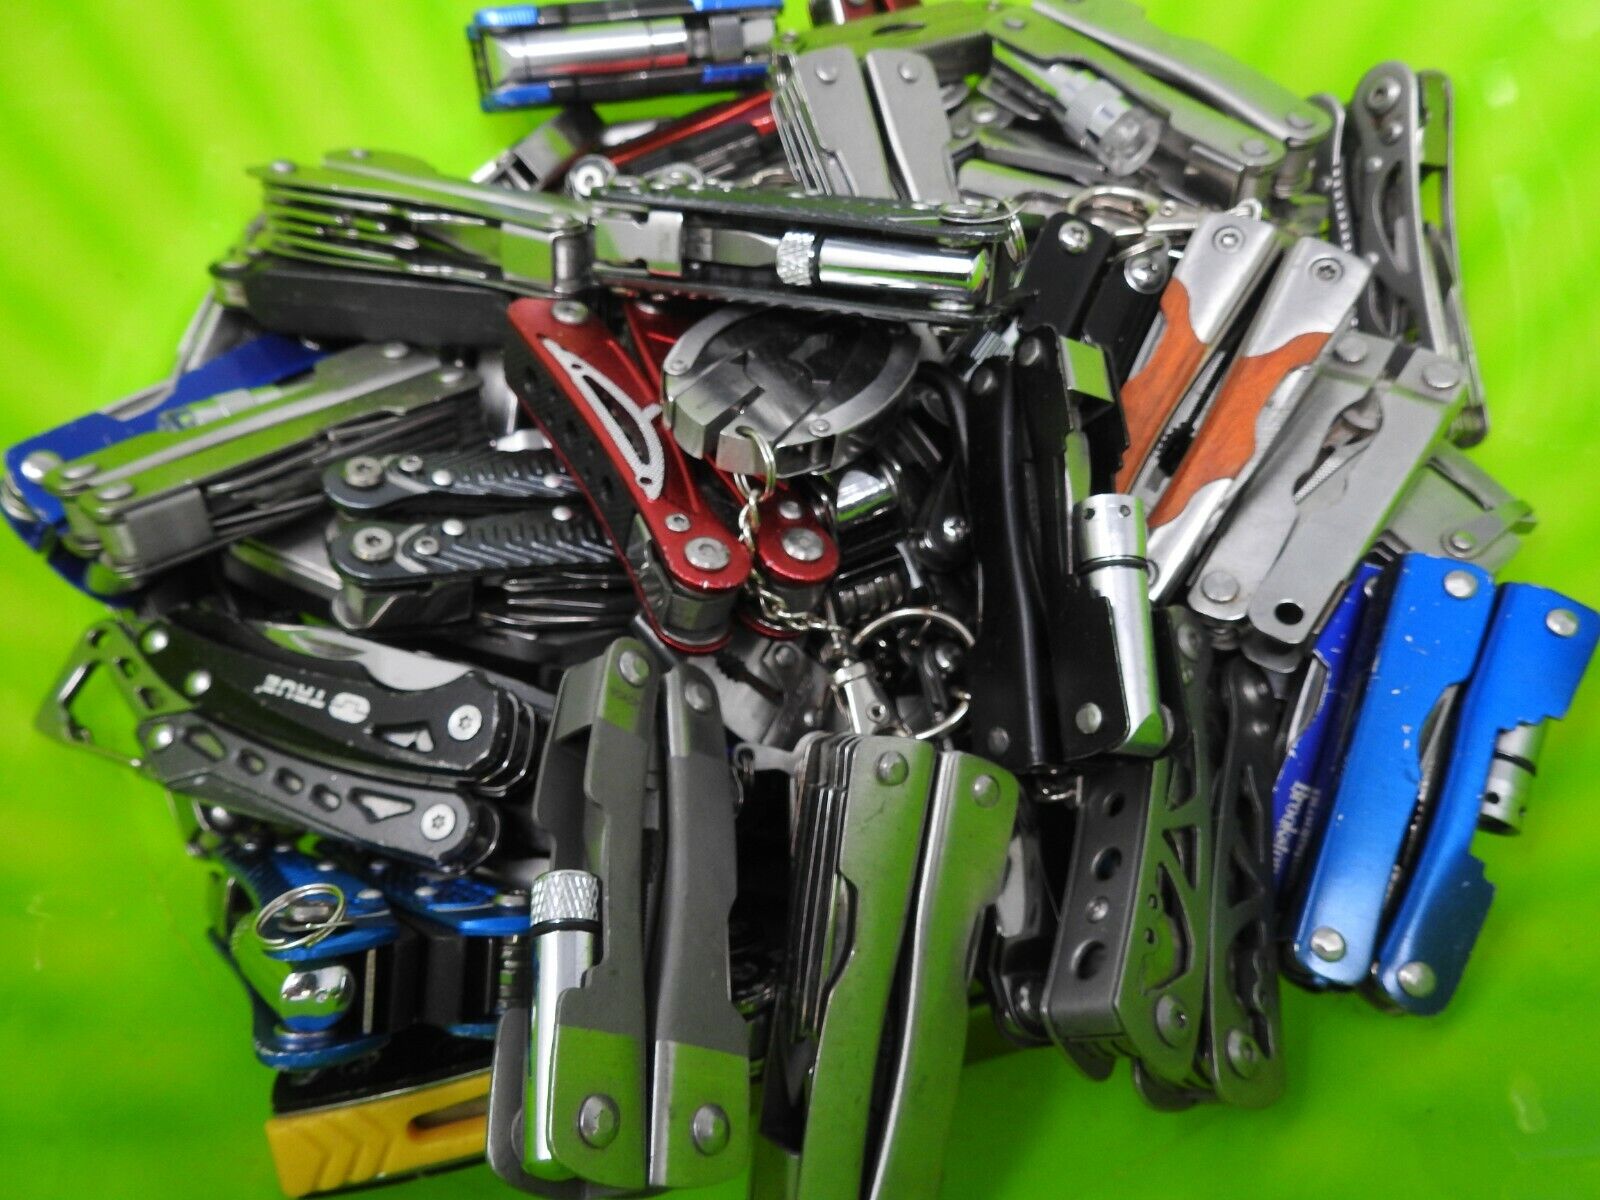 Wholesale Lot of 50 Small Multi-Tools Pliers - Flea Market Swap Meet Specials